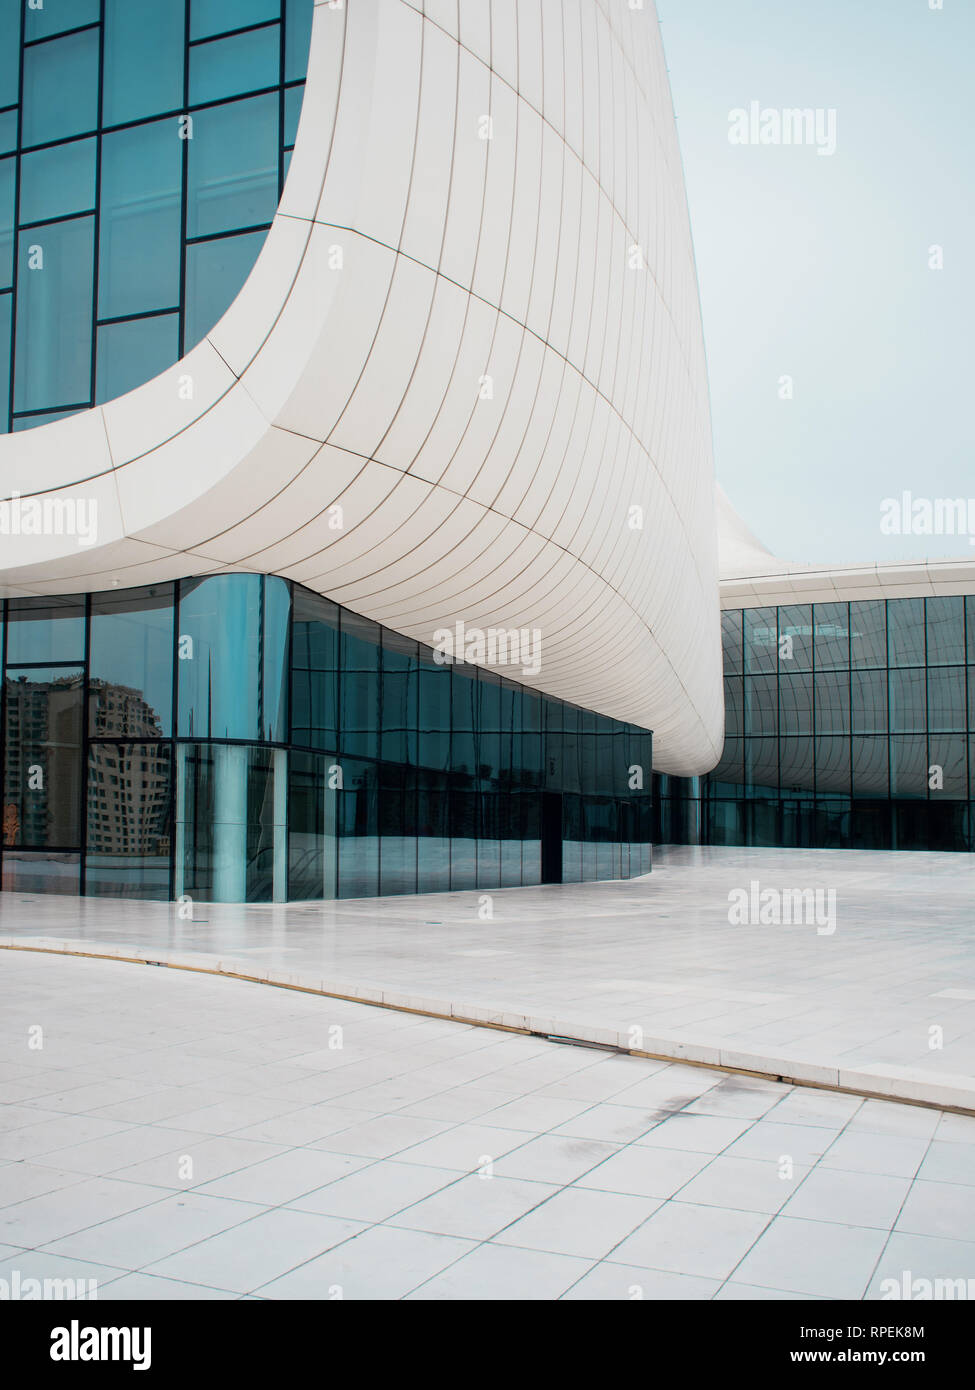 BAKU, AZERBAIJAN - APRIL 28, 2018: The Heydar Aliyev center in Baku. Modern architecture, futuristic white building smooth shapes. Stock Photo